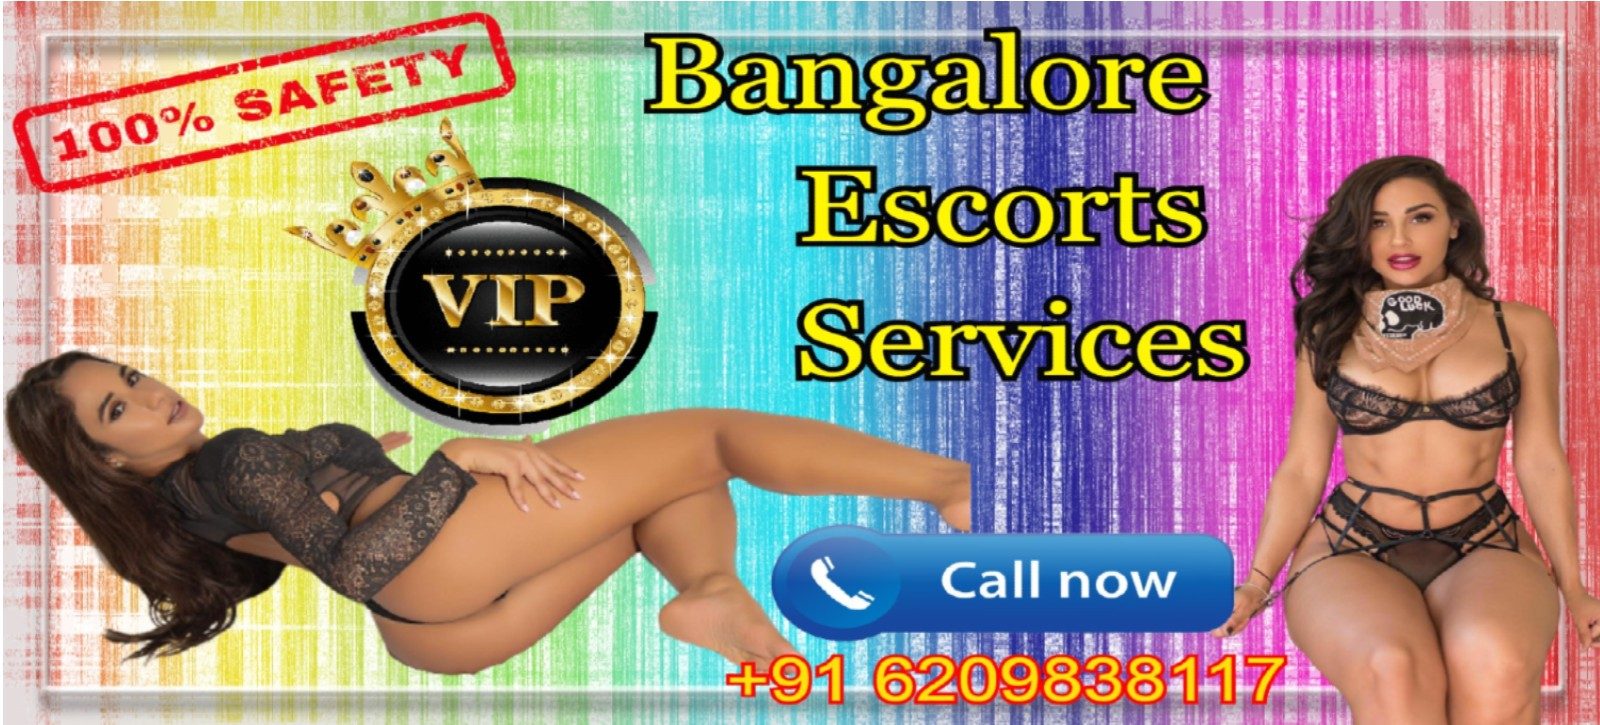 Bangalore-Escorts services